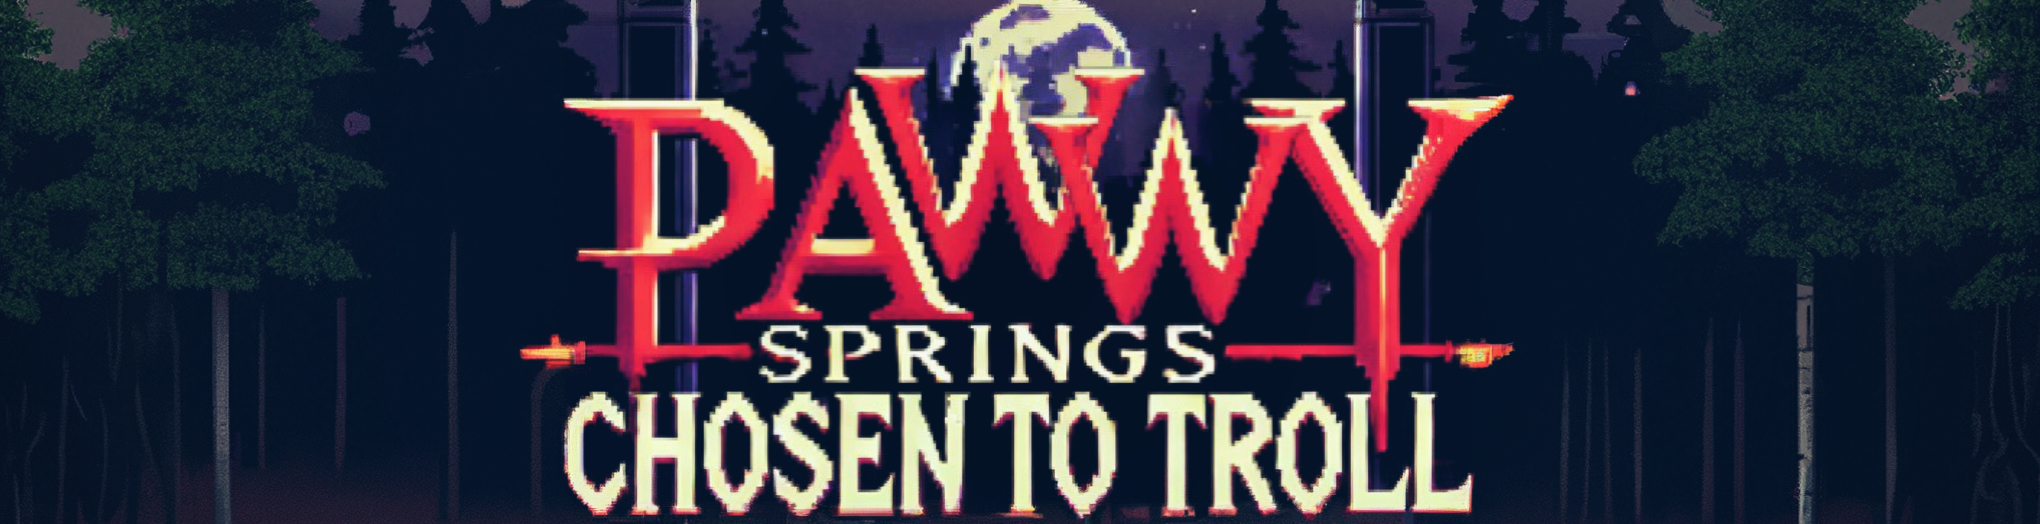 Pawwy Springs: chosen to Troll